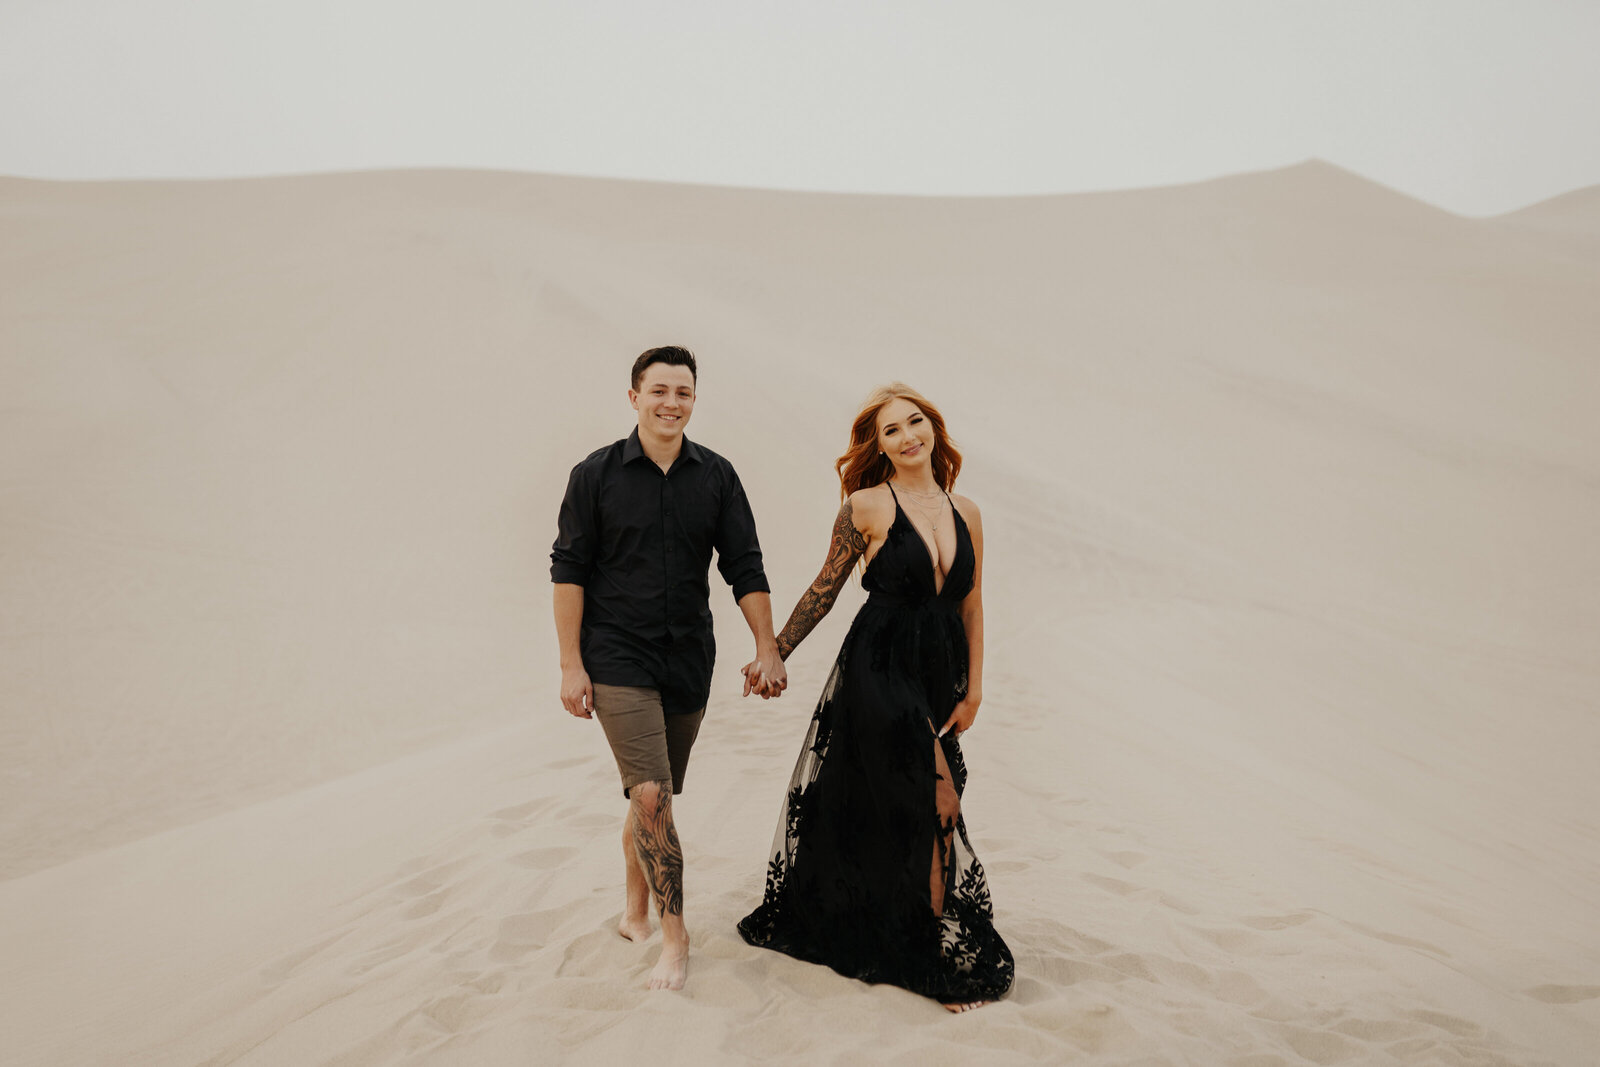 Sand Dunes Couples Photos - Raquel King Photography47